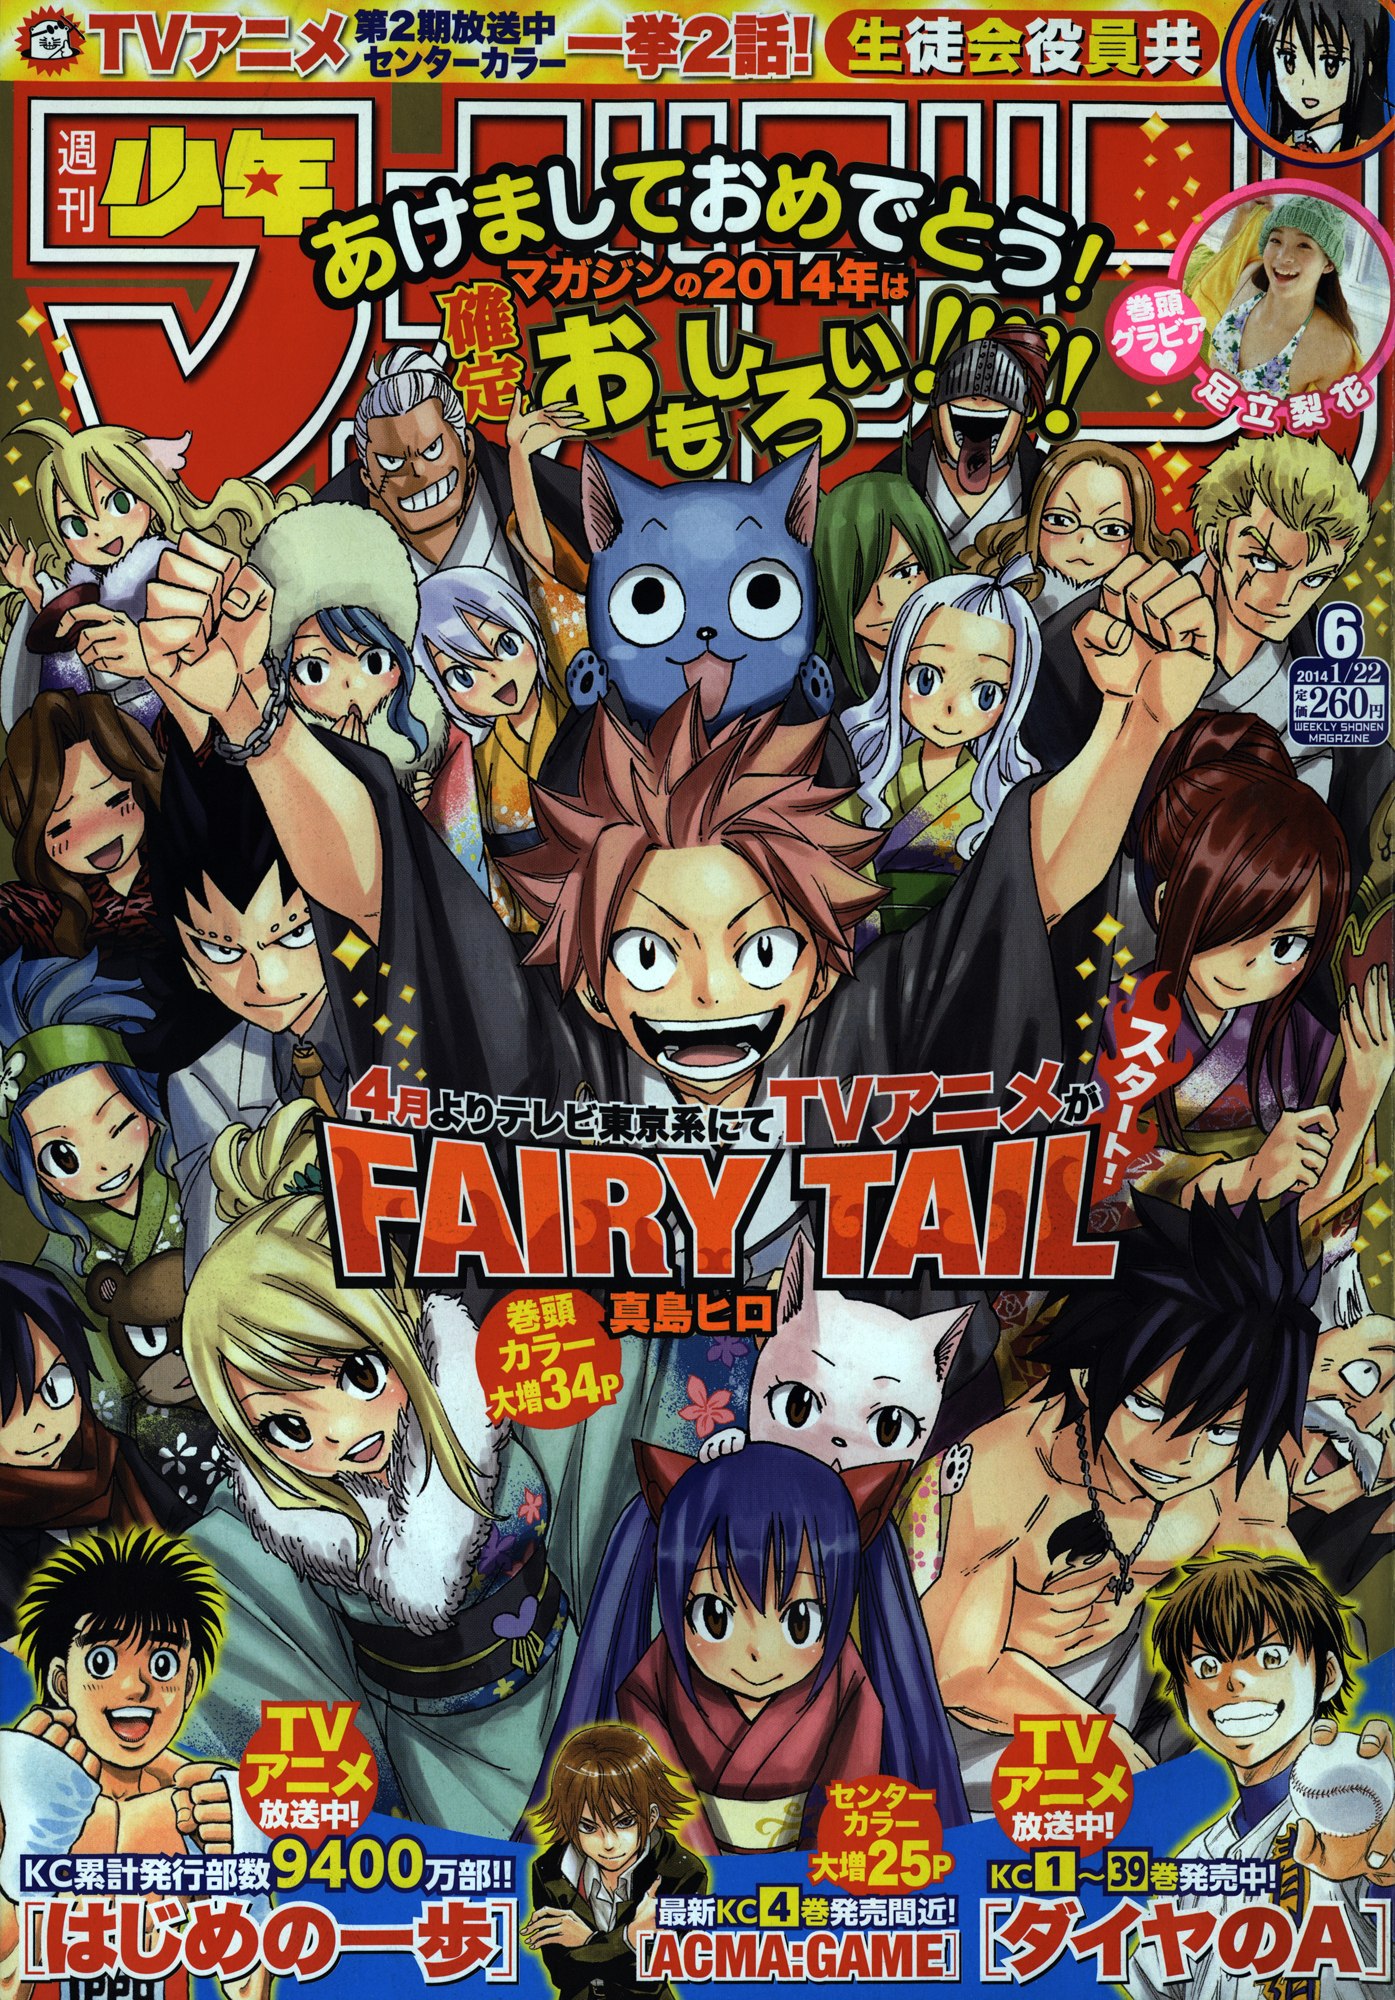 “Fairy Tail” animeen vender tilbage på TV til april 2014